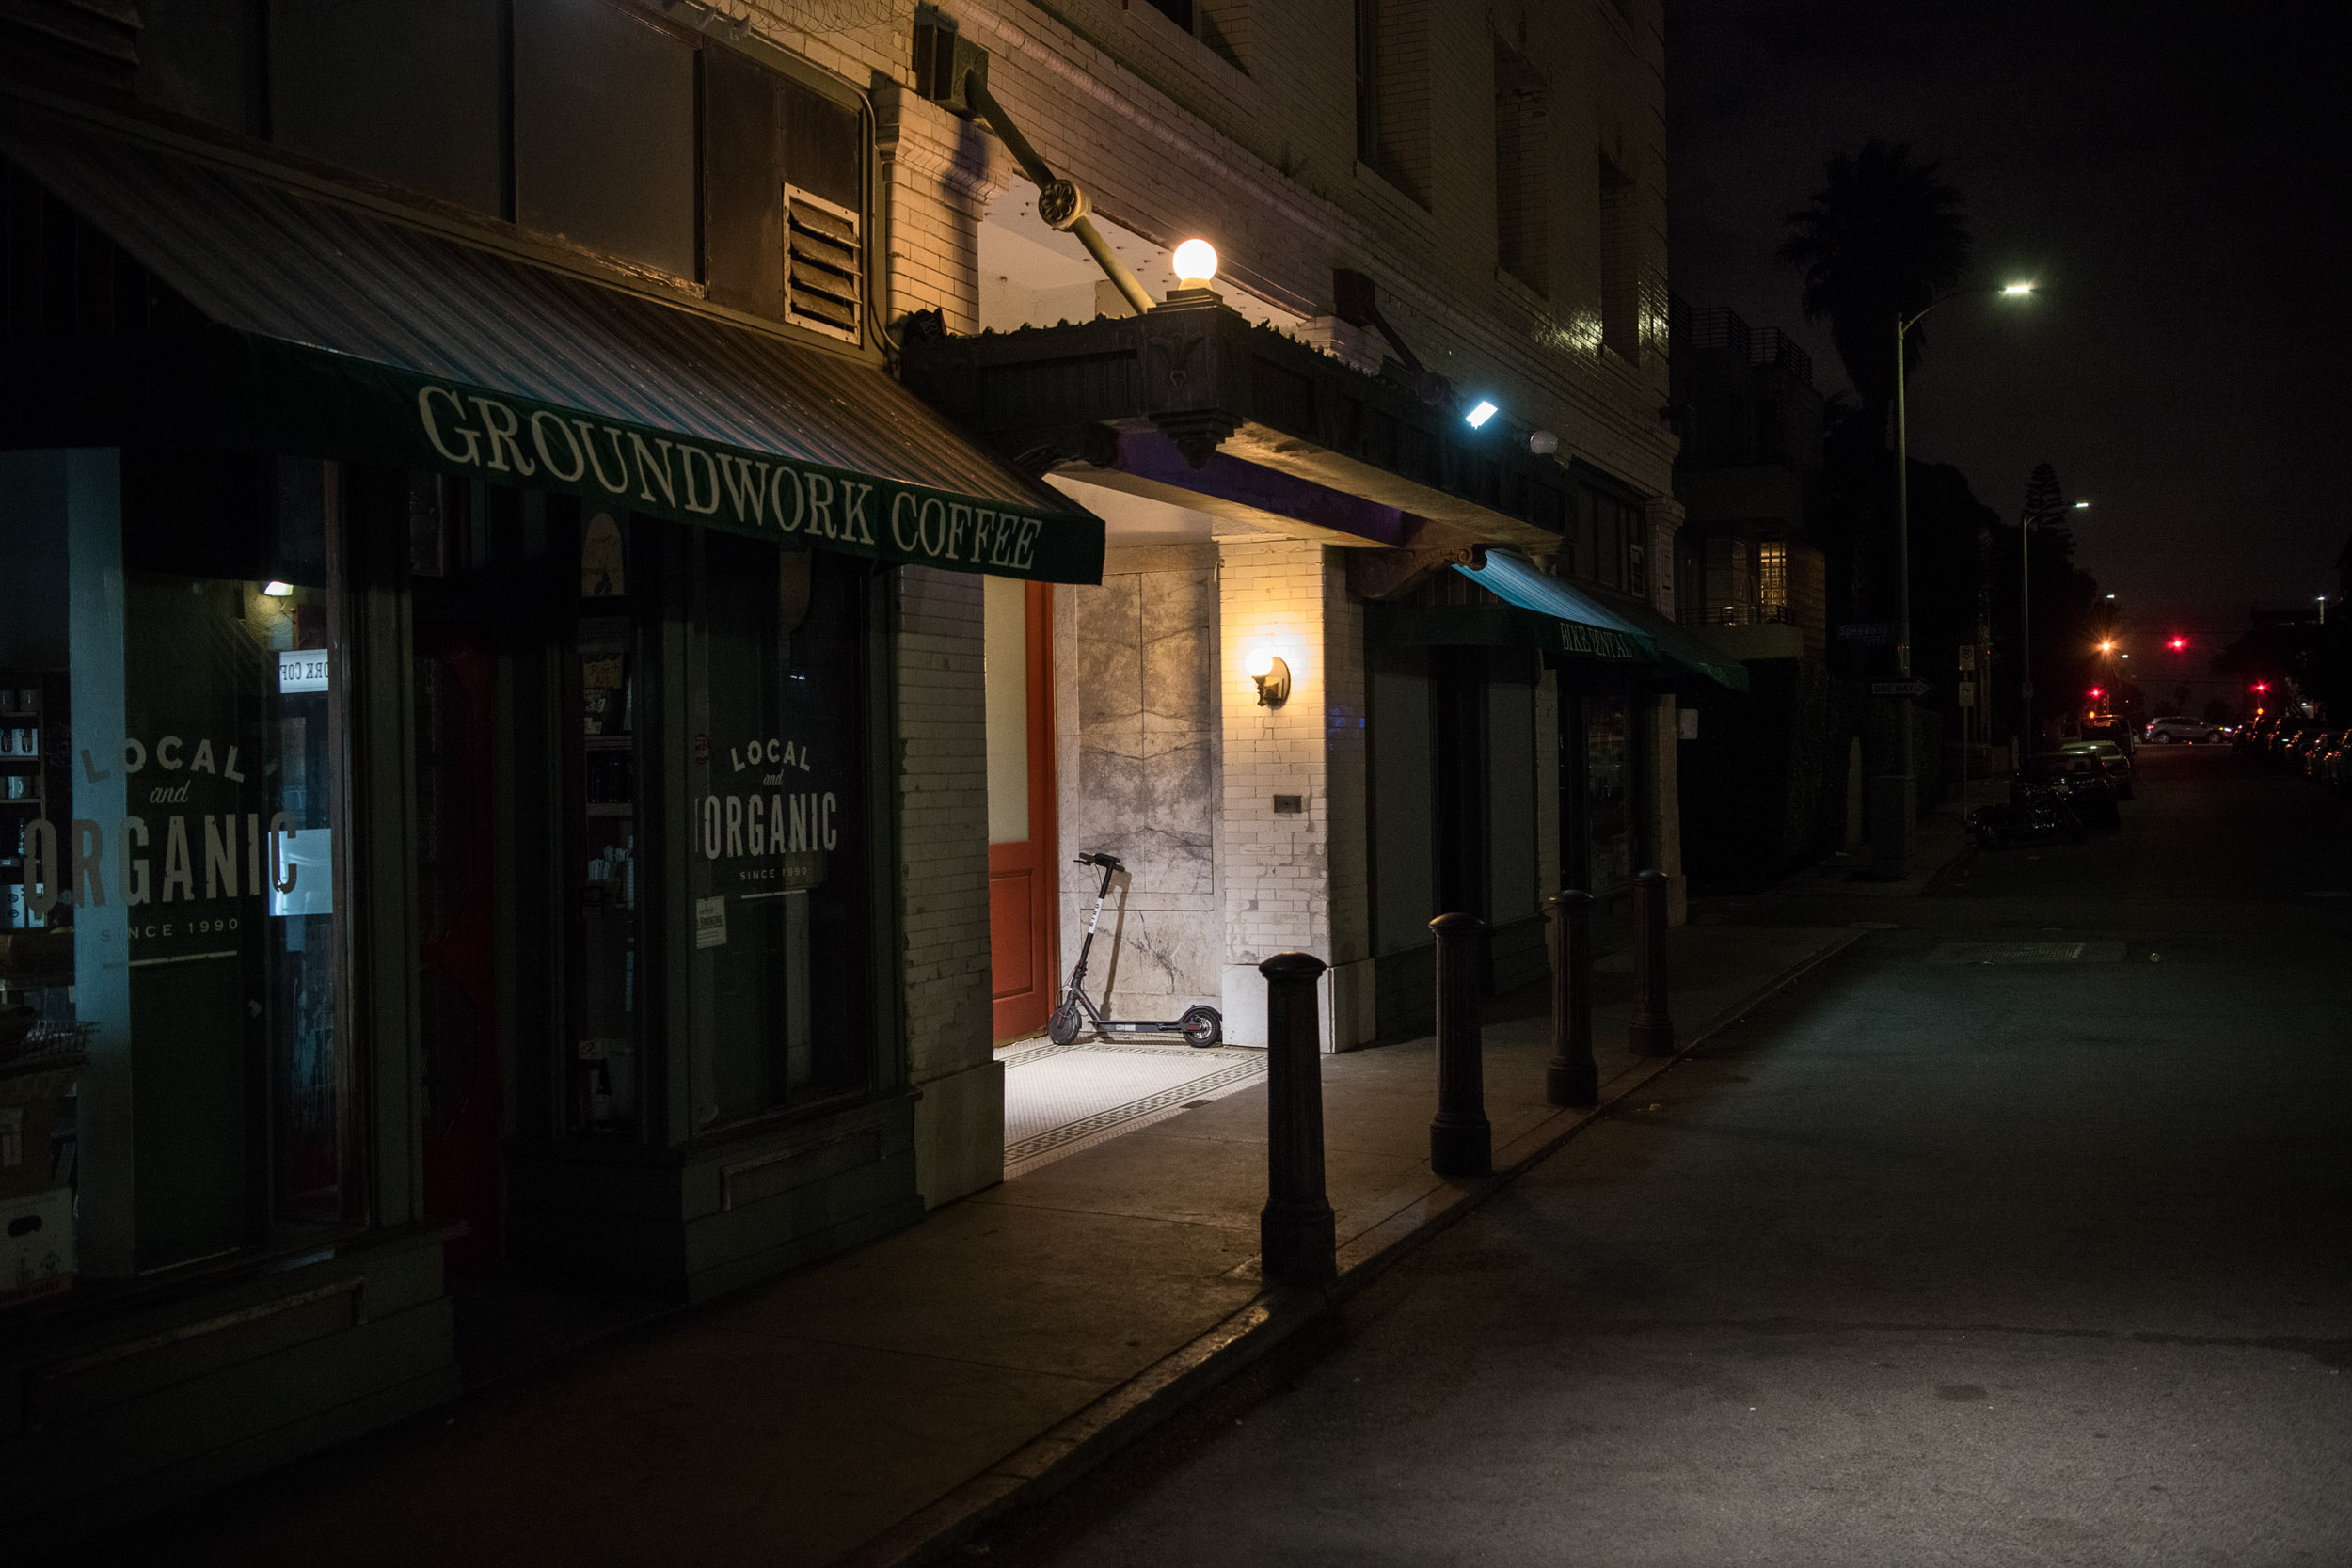 A bird scooter beneath a street lamp at night in Venice Beach.